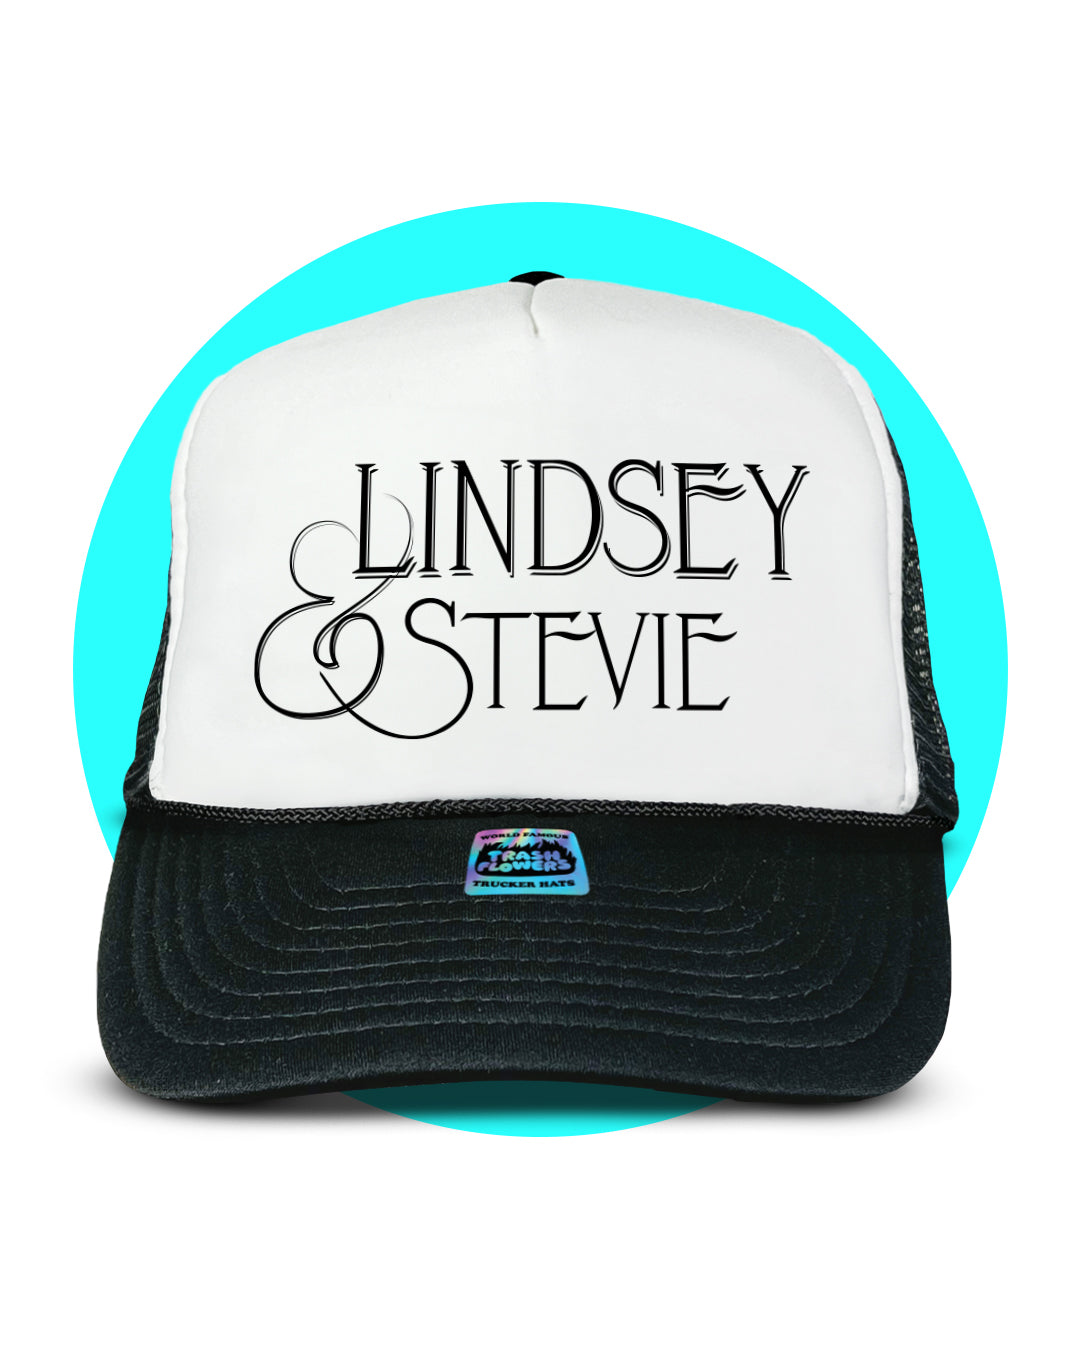 Lindsey & Stevie Fleetwood Mac Trucker Hat